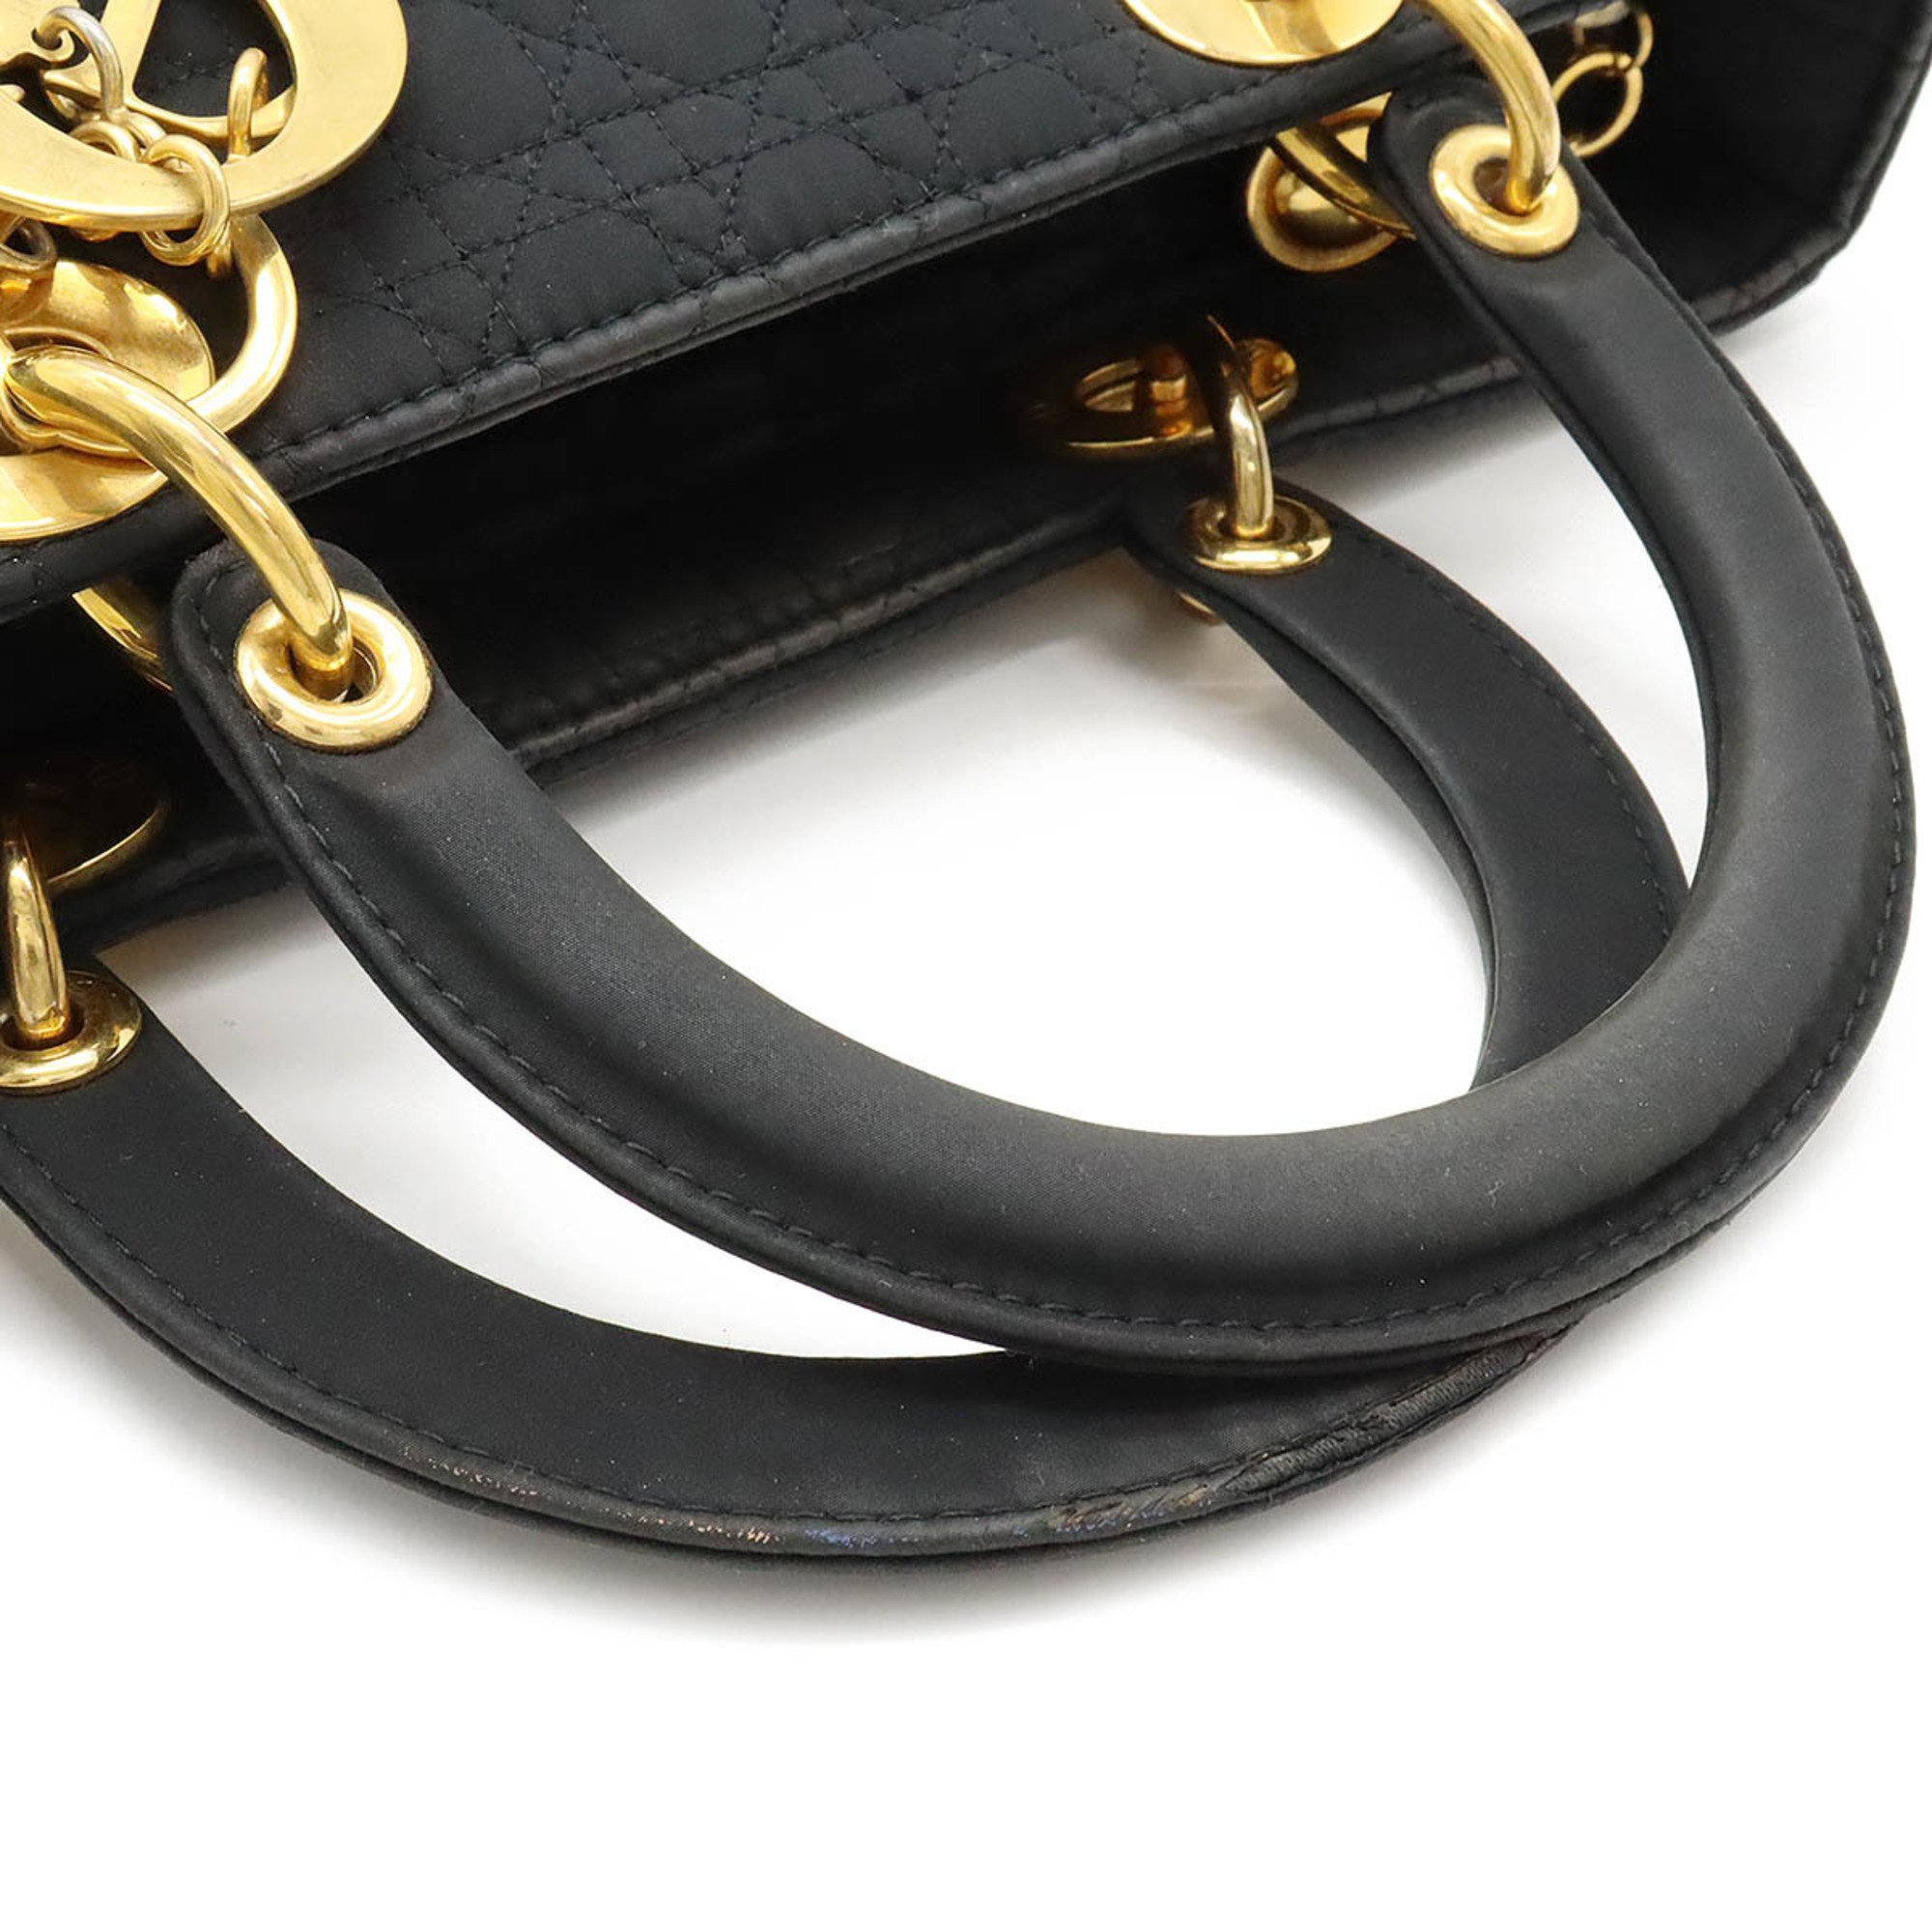 Christian Dior Lady Cannage handbag in nylon and leather black